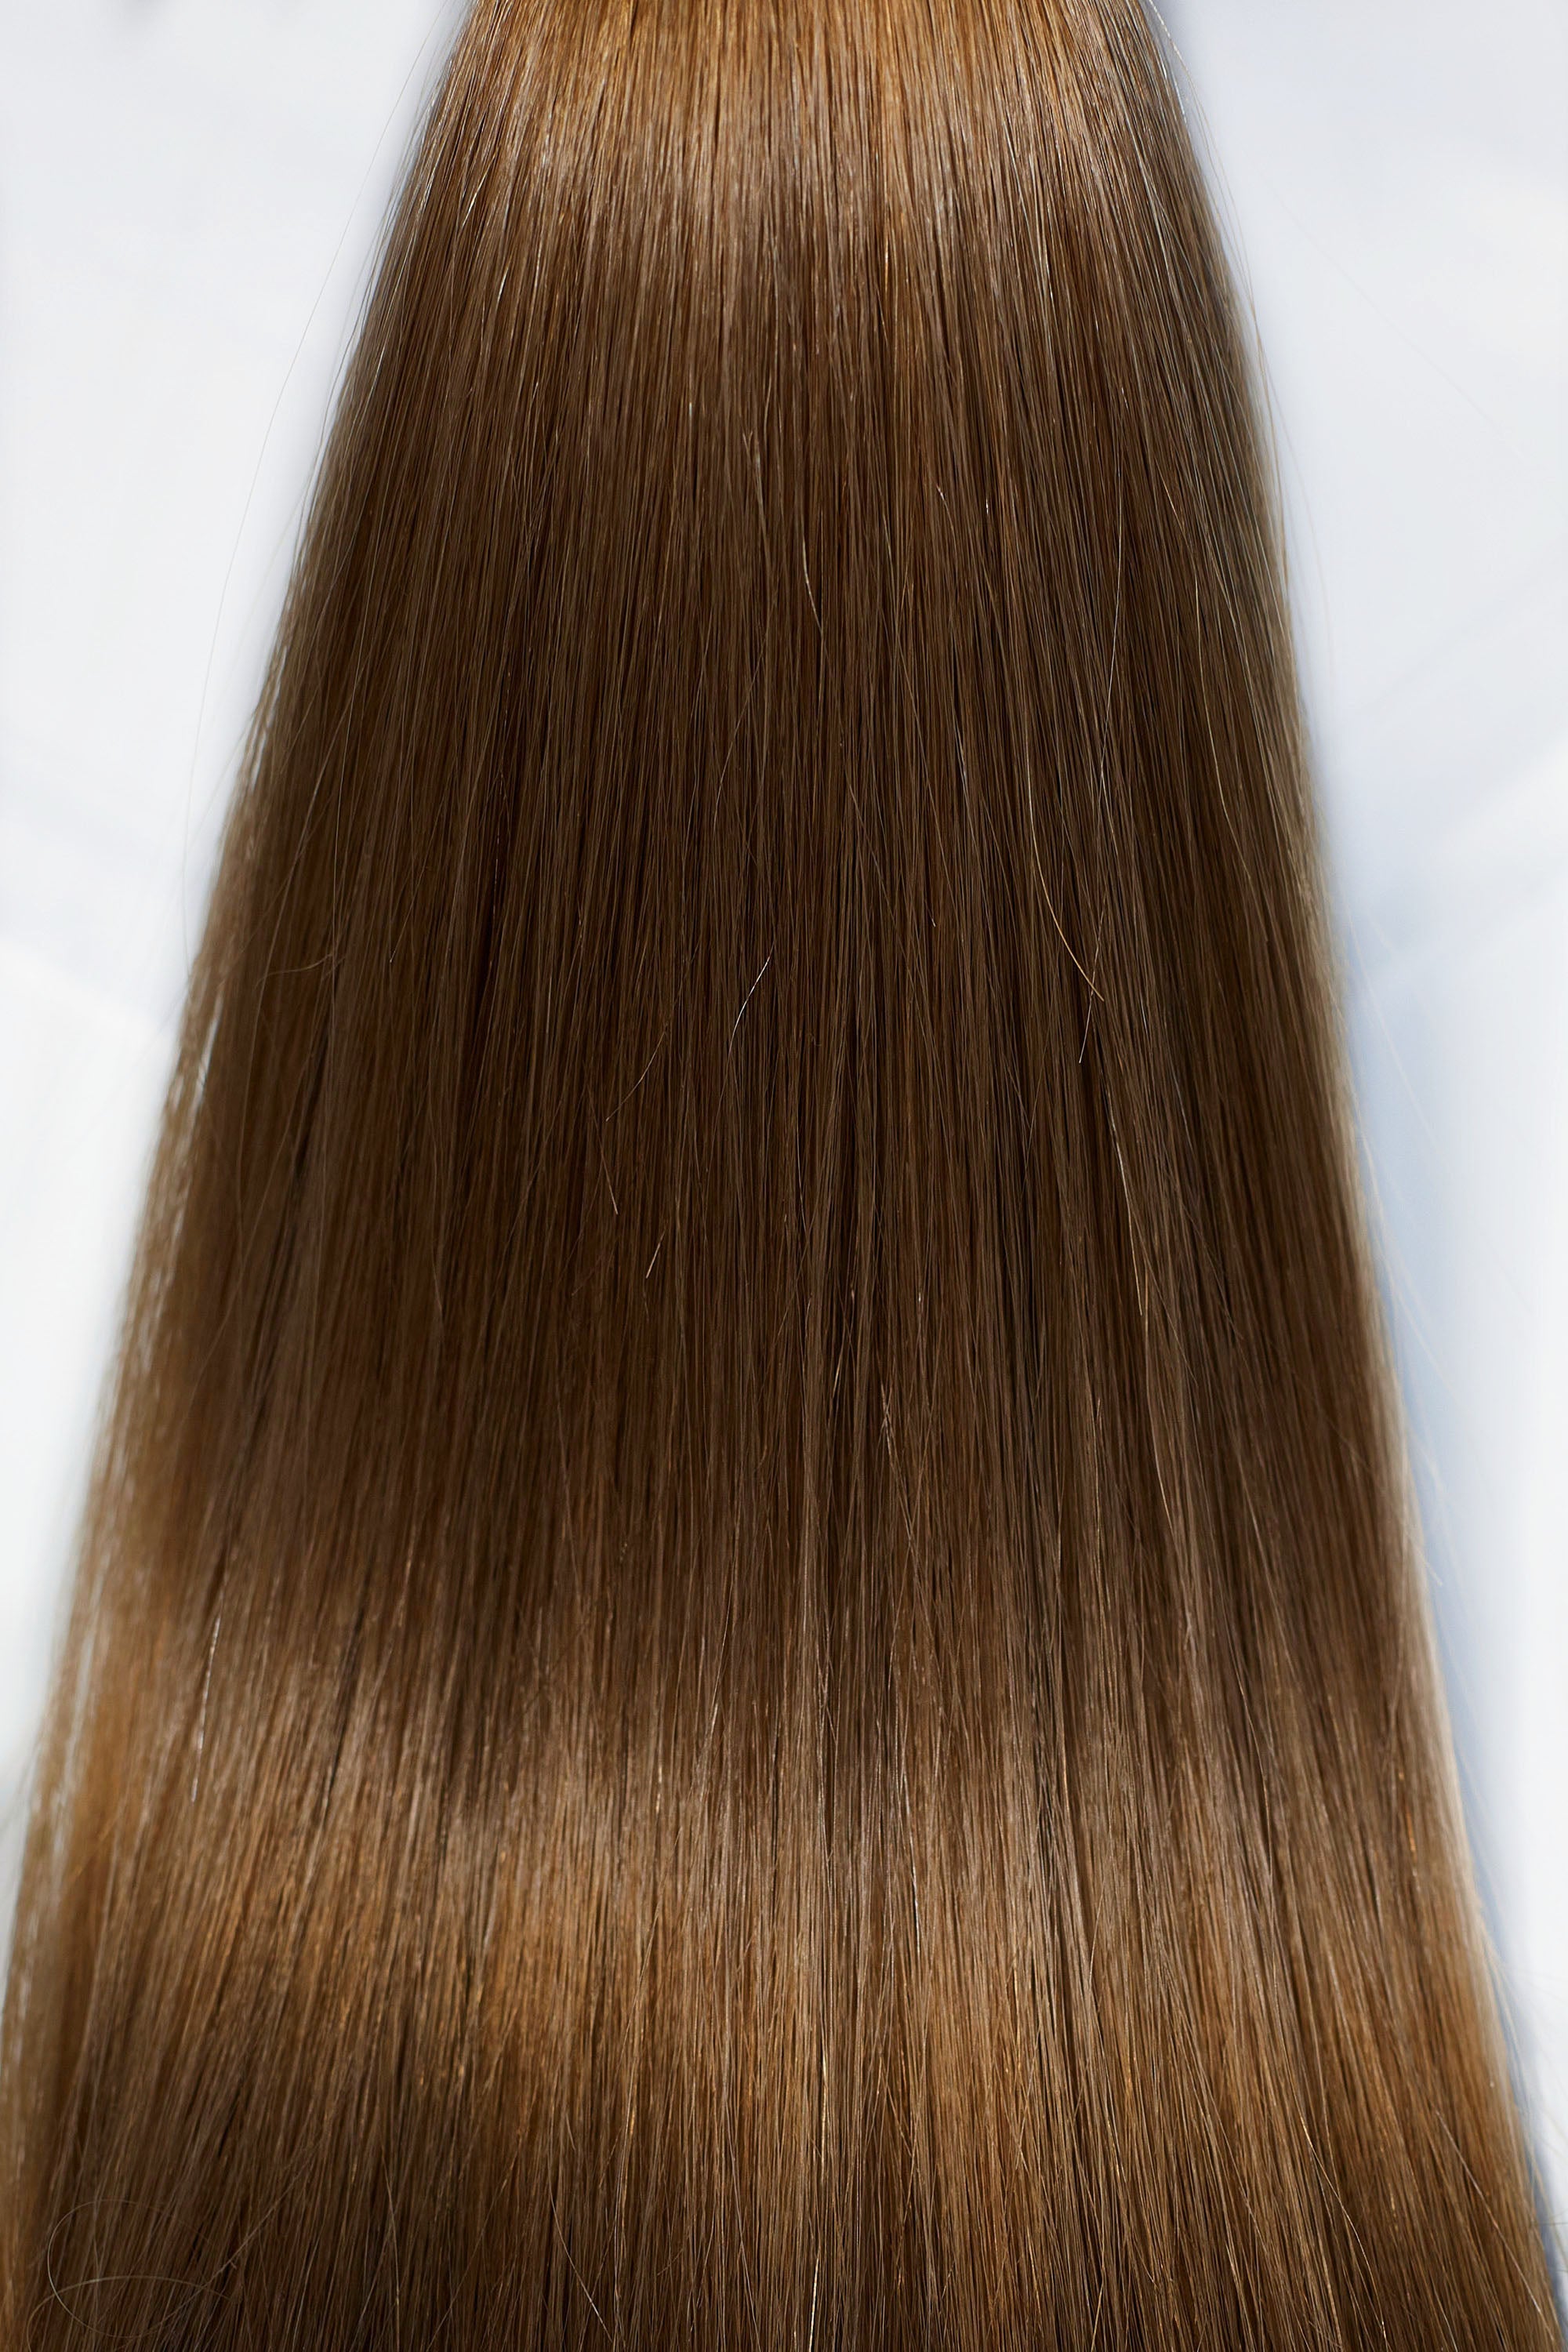 Behair professional Keratin Tip "Premium" 28" (70cm) Natural Straight Chestnut #6 - 25g (1g each pcs) hair extensions